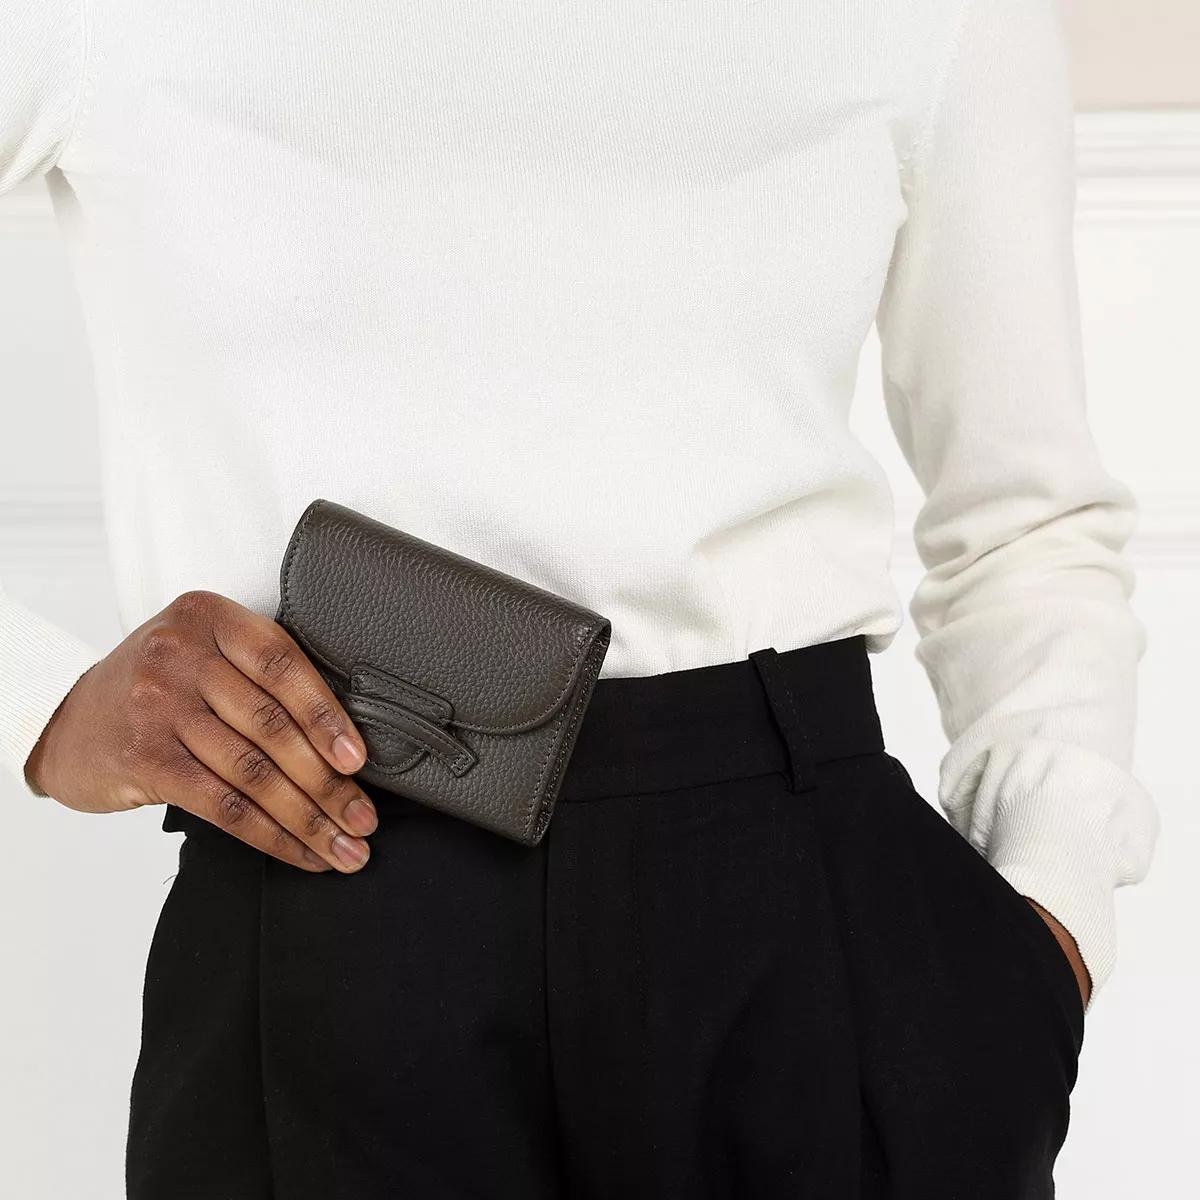 ZUKEEMP Card Wallet Business Card Holder For Women Men Magnetic